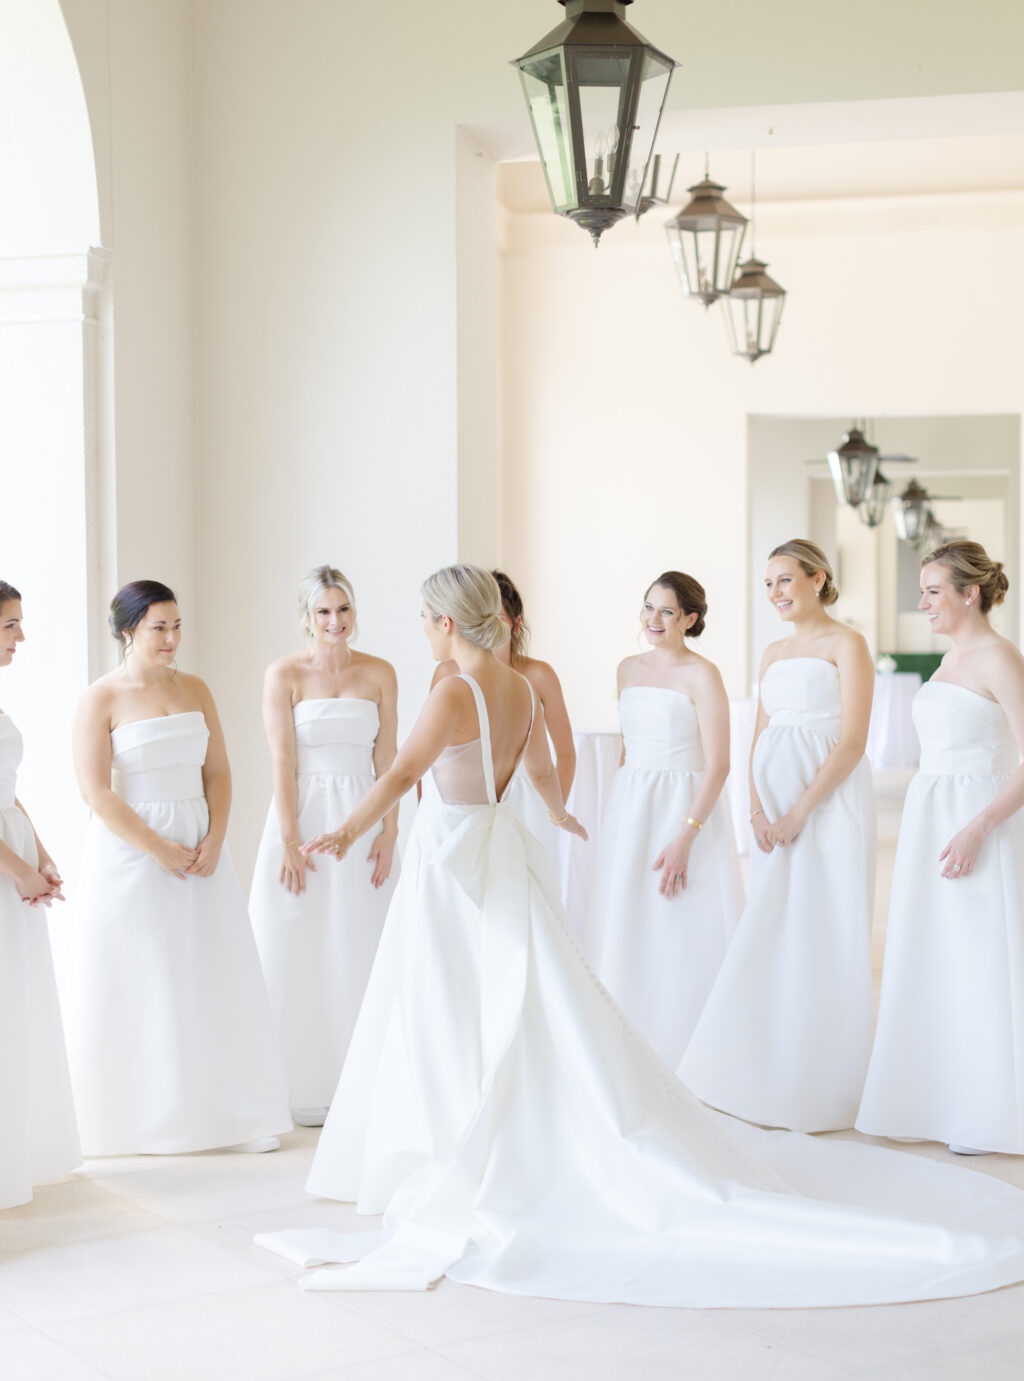 All-White Amsale Bella Bridesmaids Strapless Dress Ideas